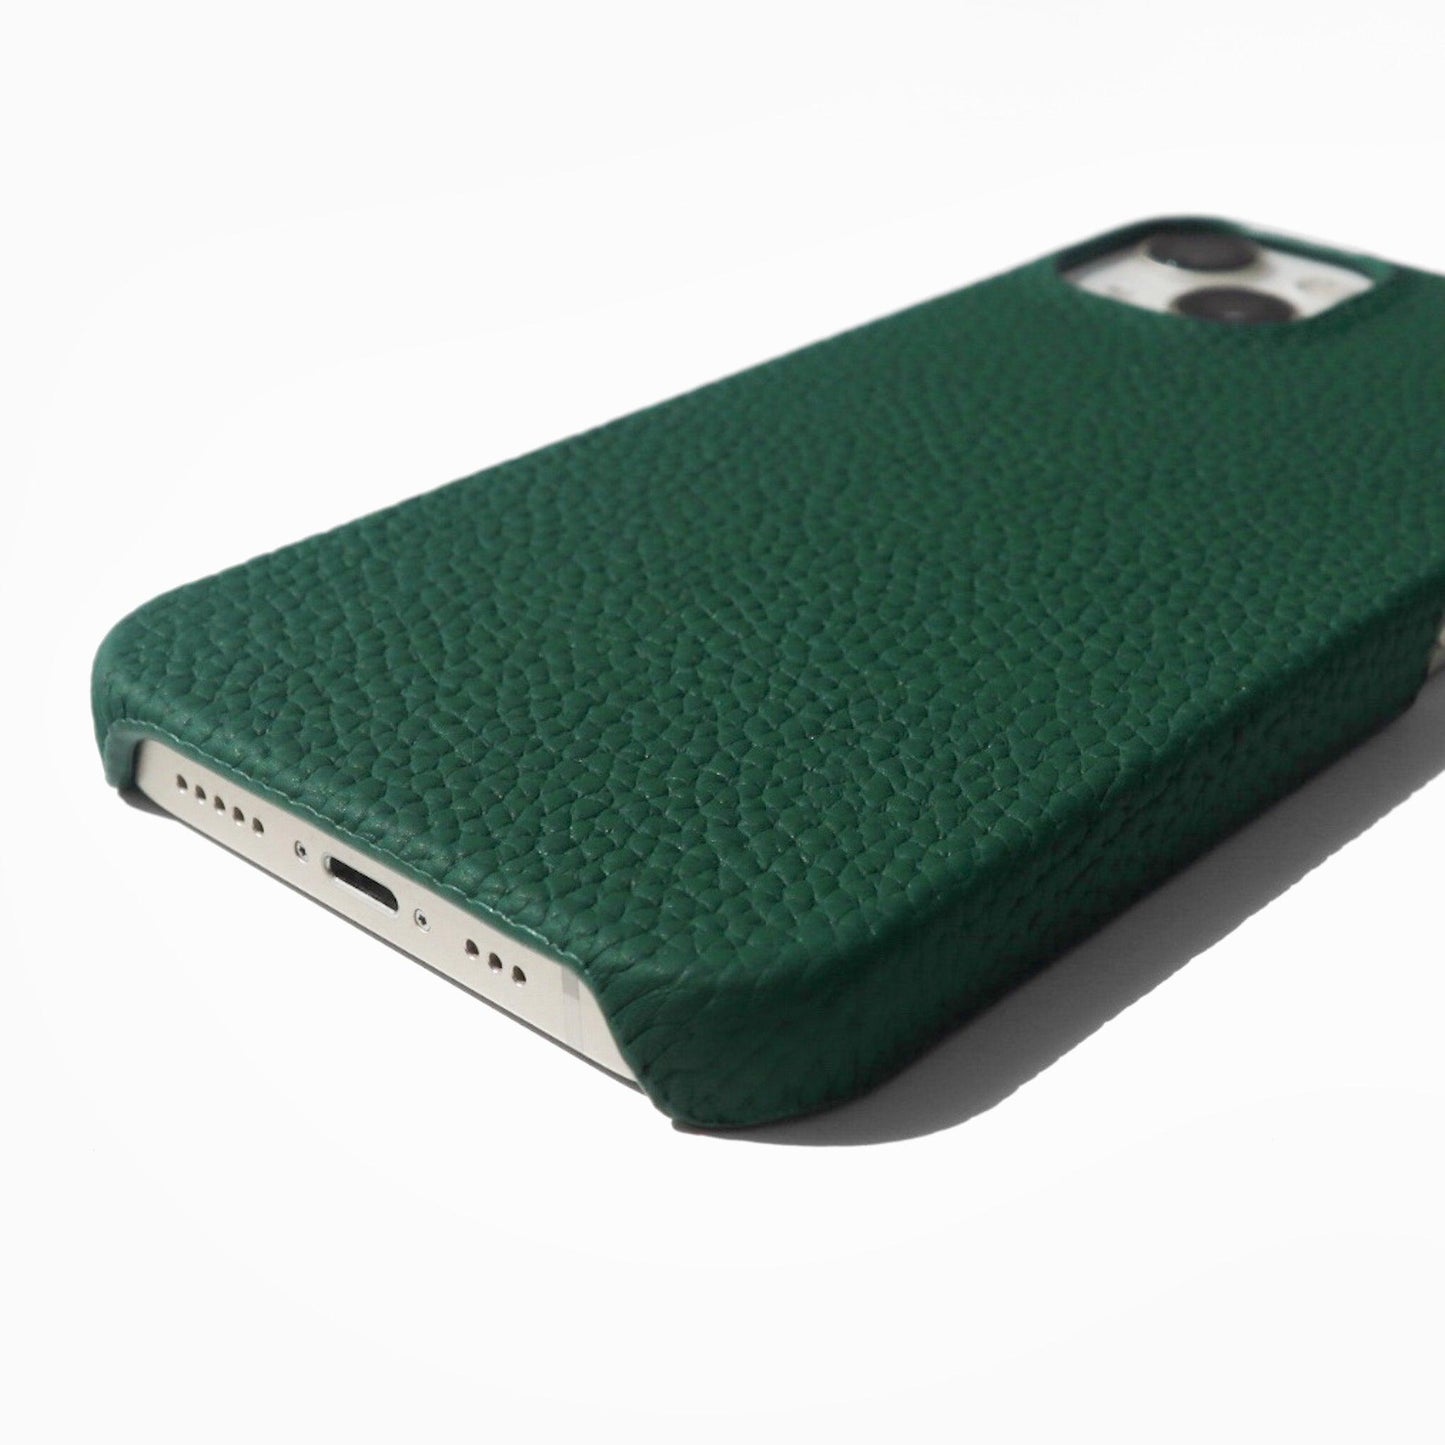 iPhone Thin Case - Retro Green